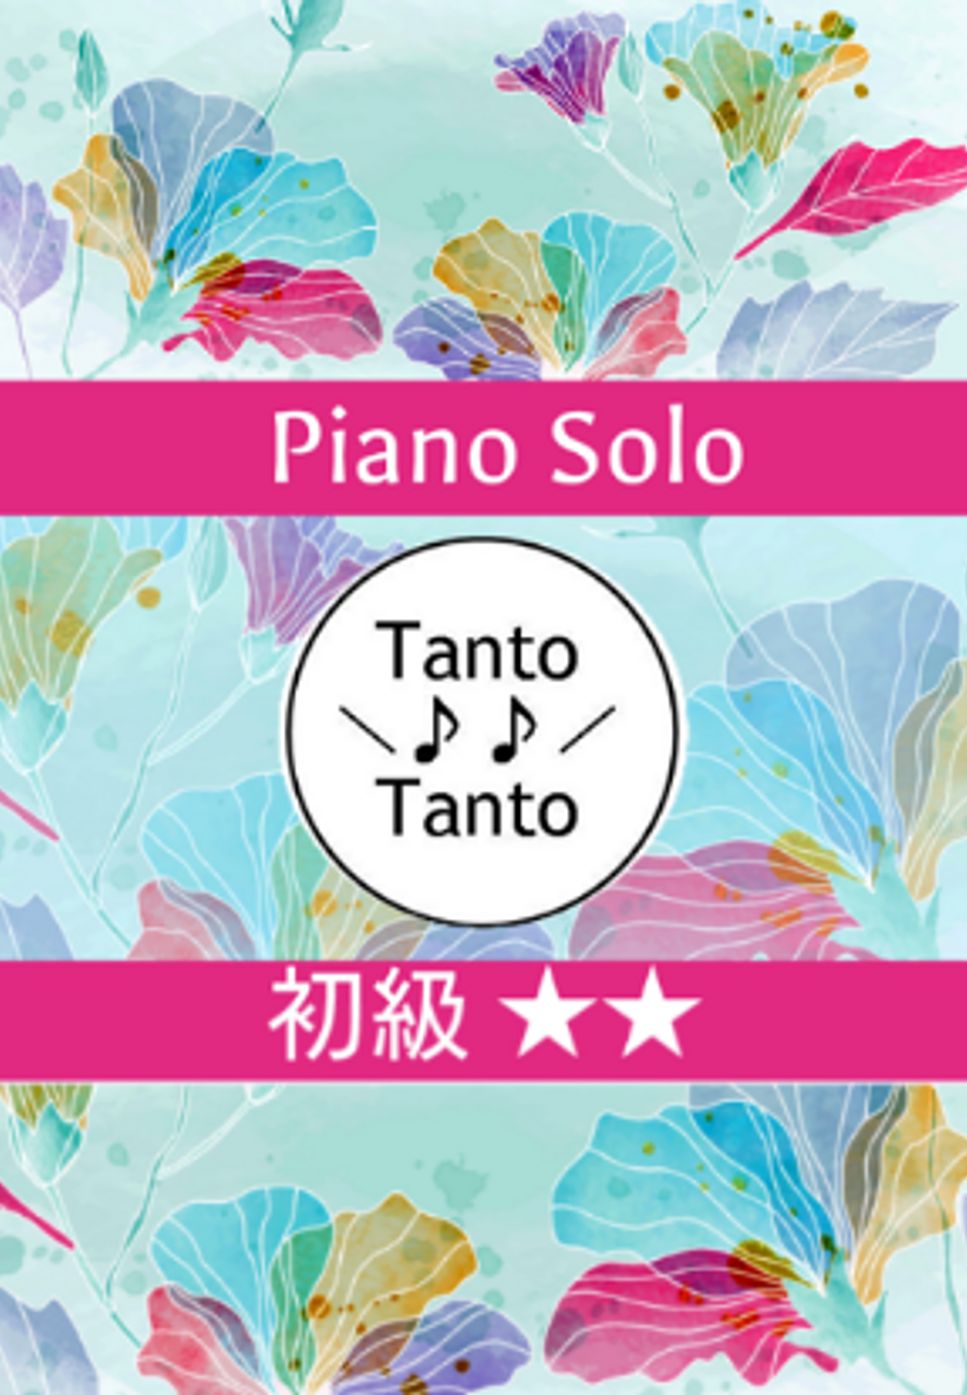 Vaundy - タイムパラドックス『ドラえもん のび太の地球交響楽』 (Piano Solo in G) by Tanto Tanto